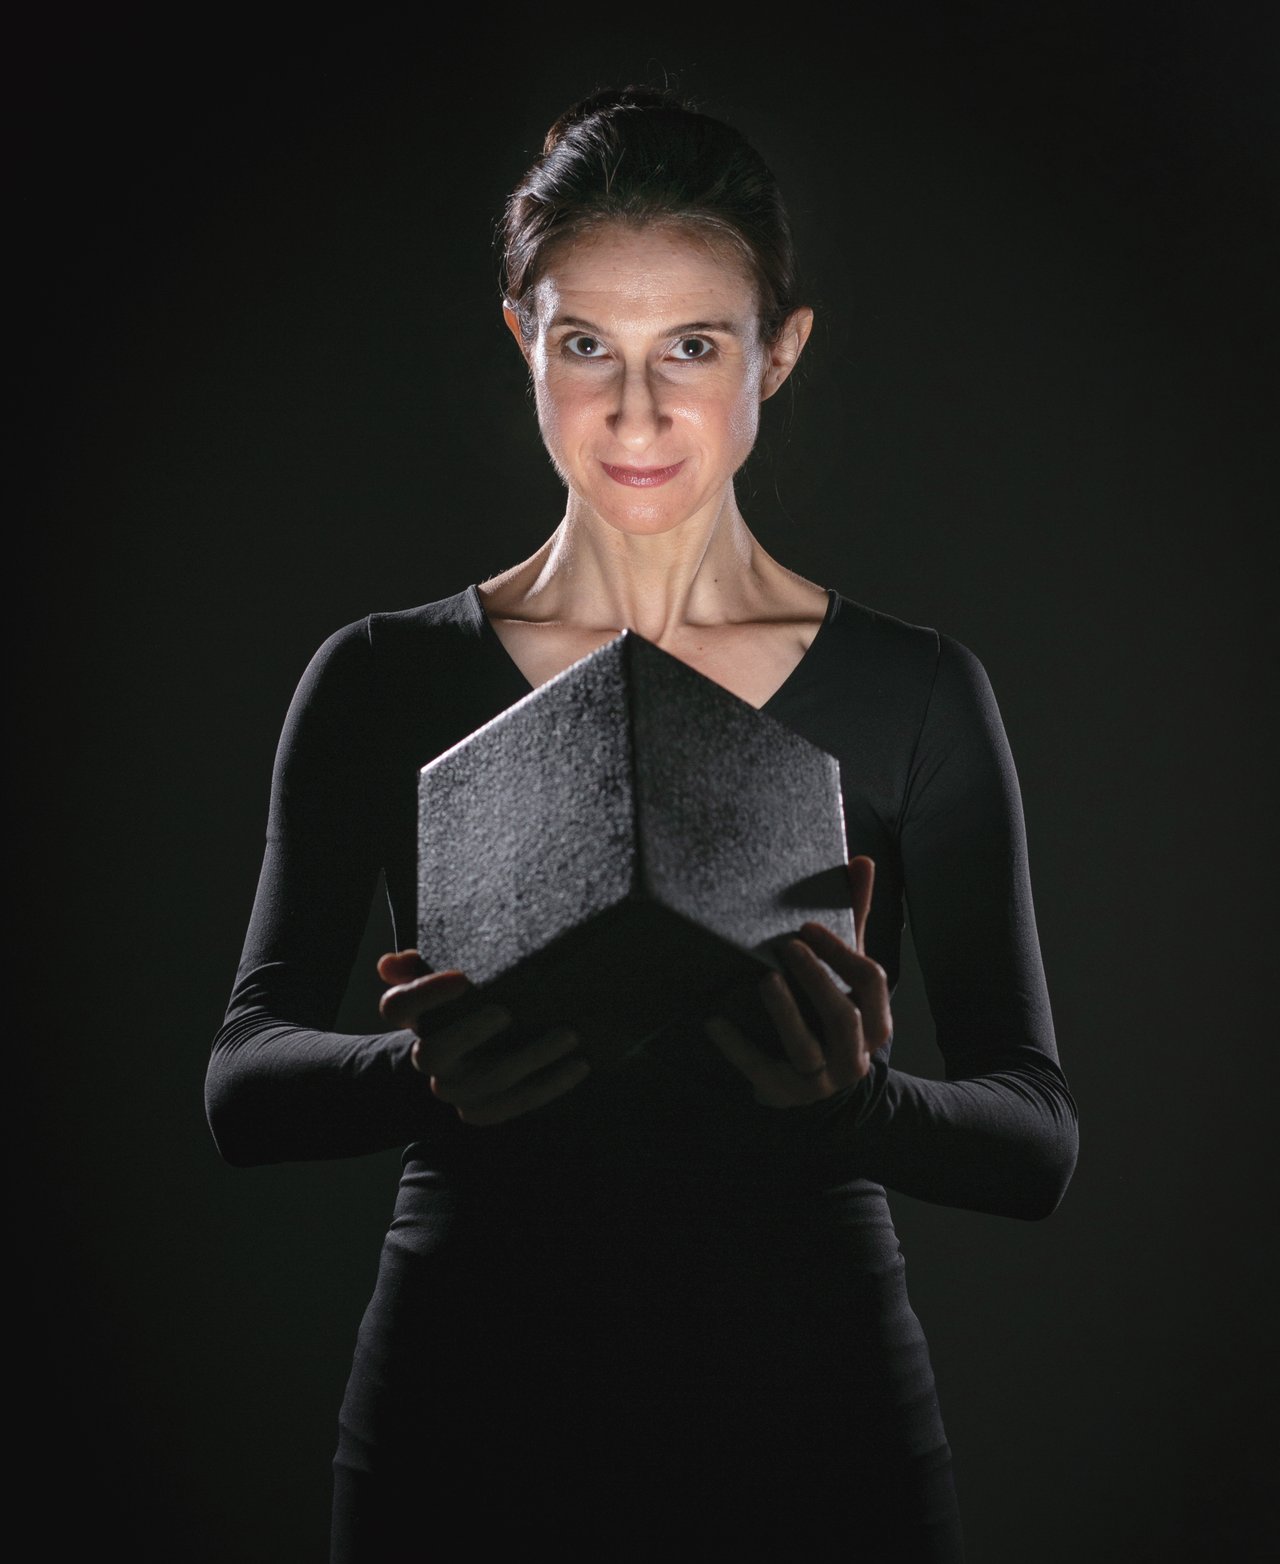 Image of Cynthia Rudin holding a black box